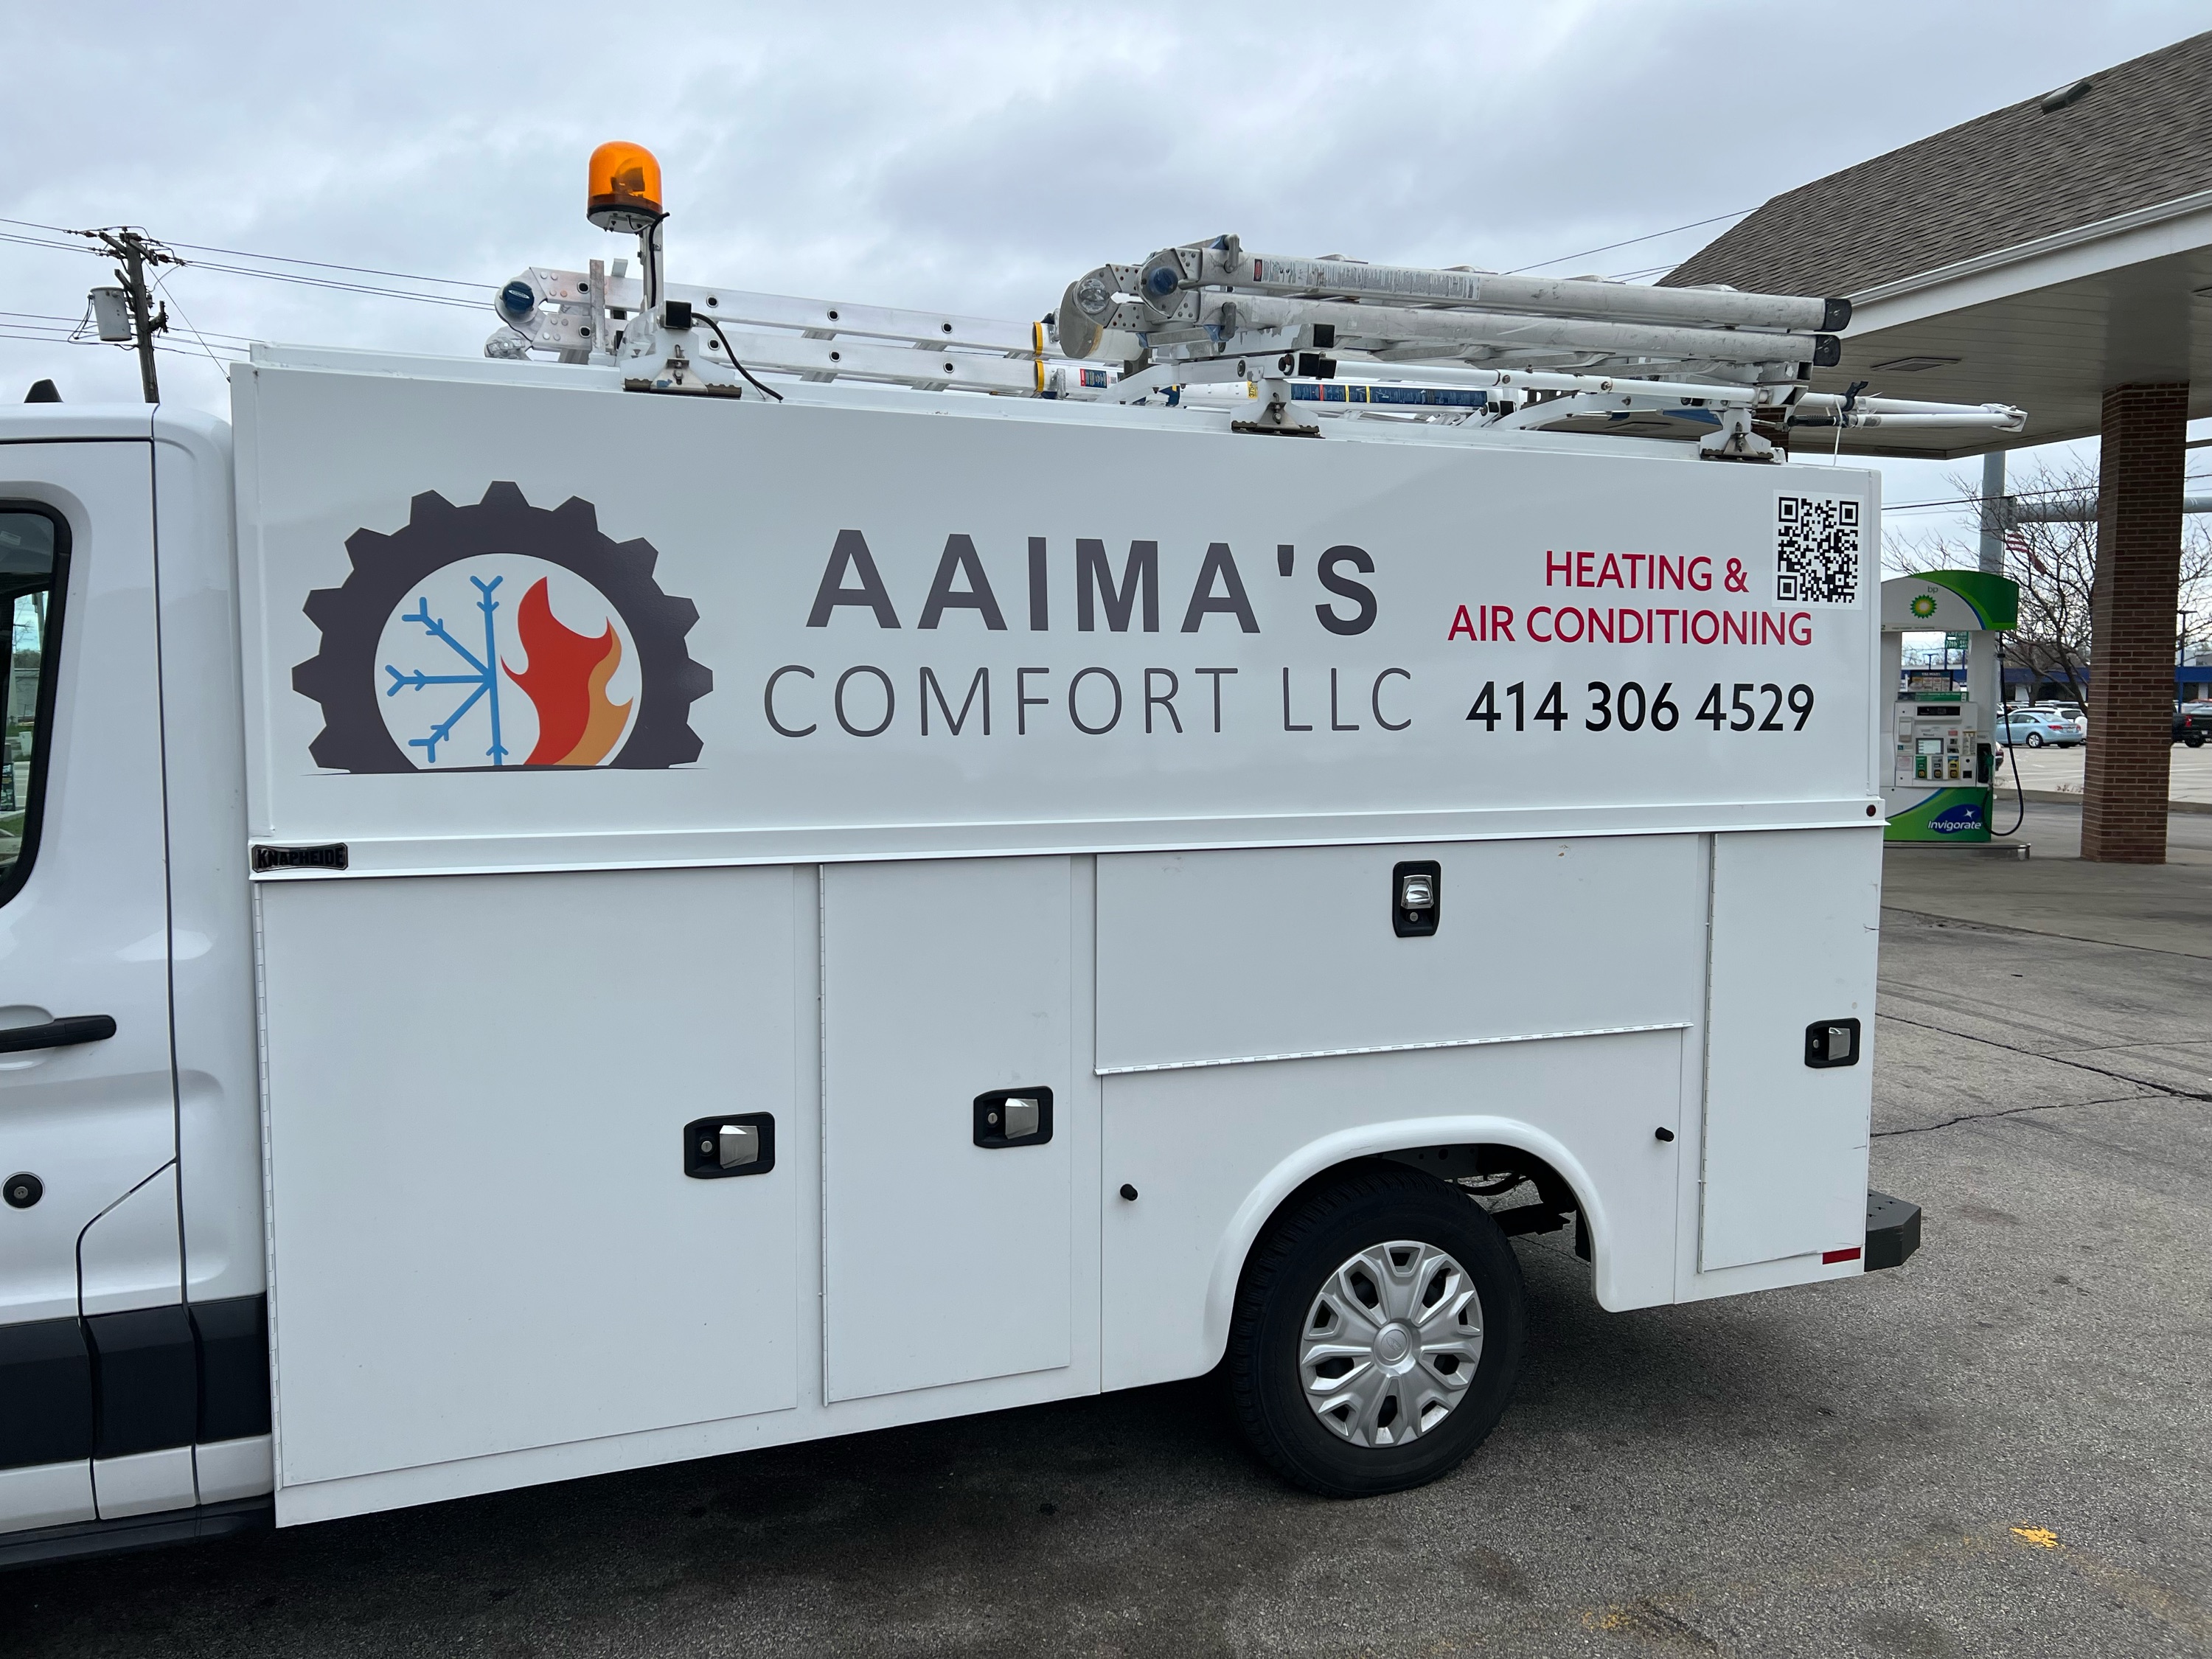 Aaima's Comfort LLC Logo